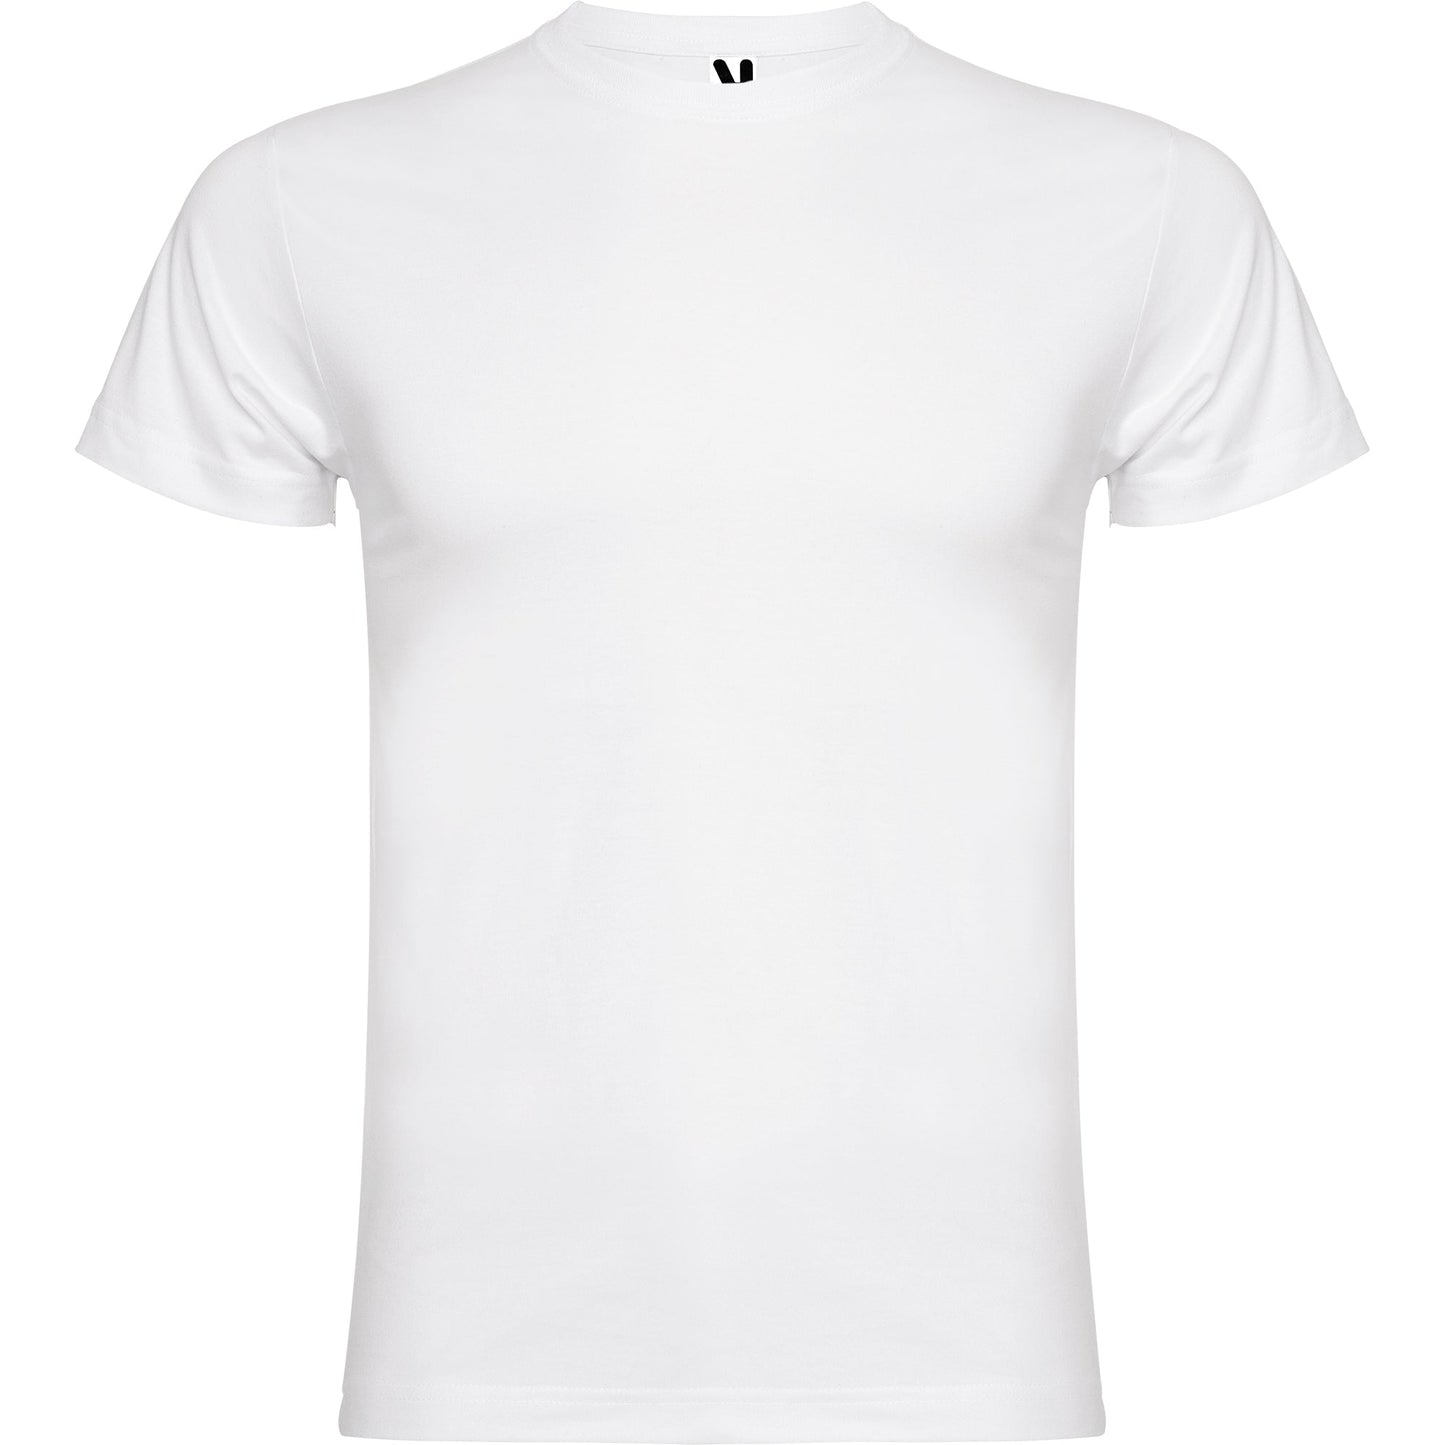 camiseta blanca bettin personalizacion